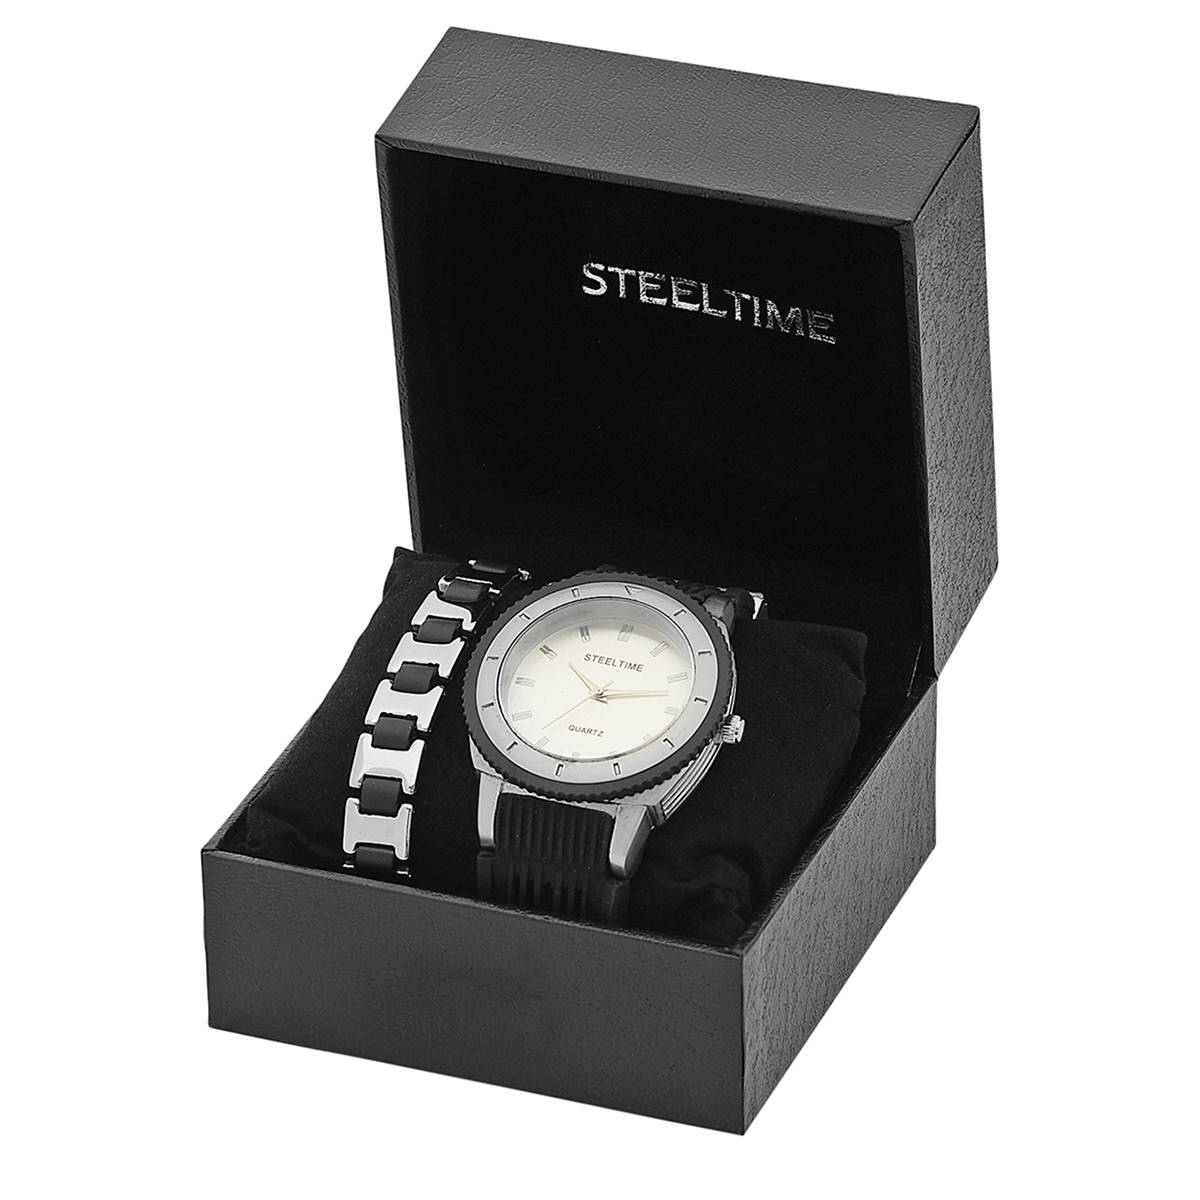 Mens Steeltime Black Watch And Bracelet Set - 954004BW